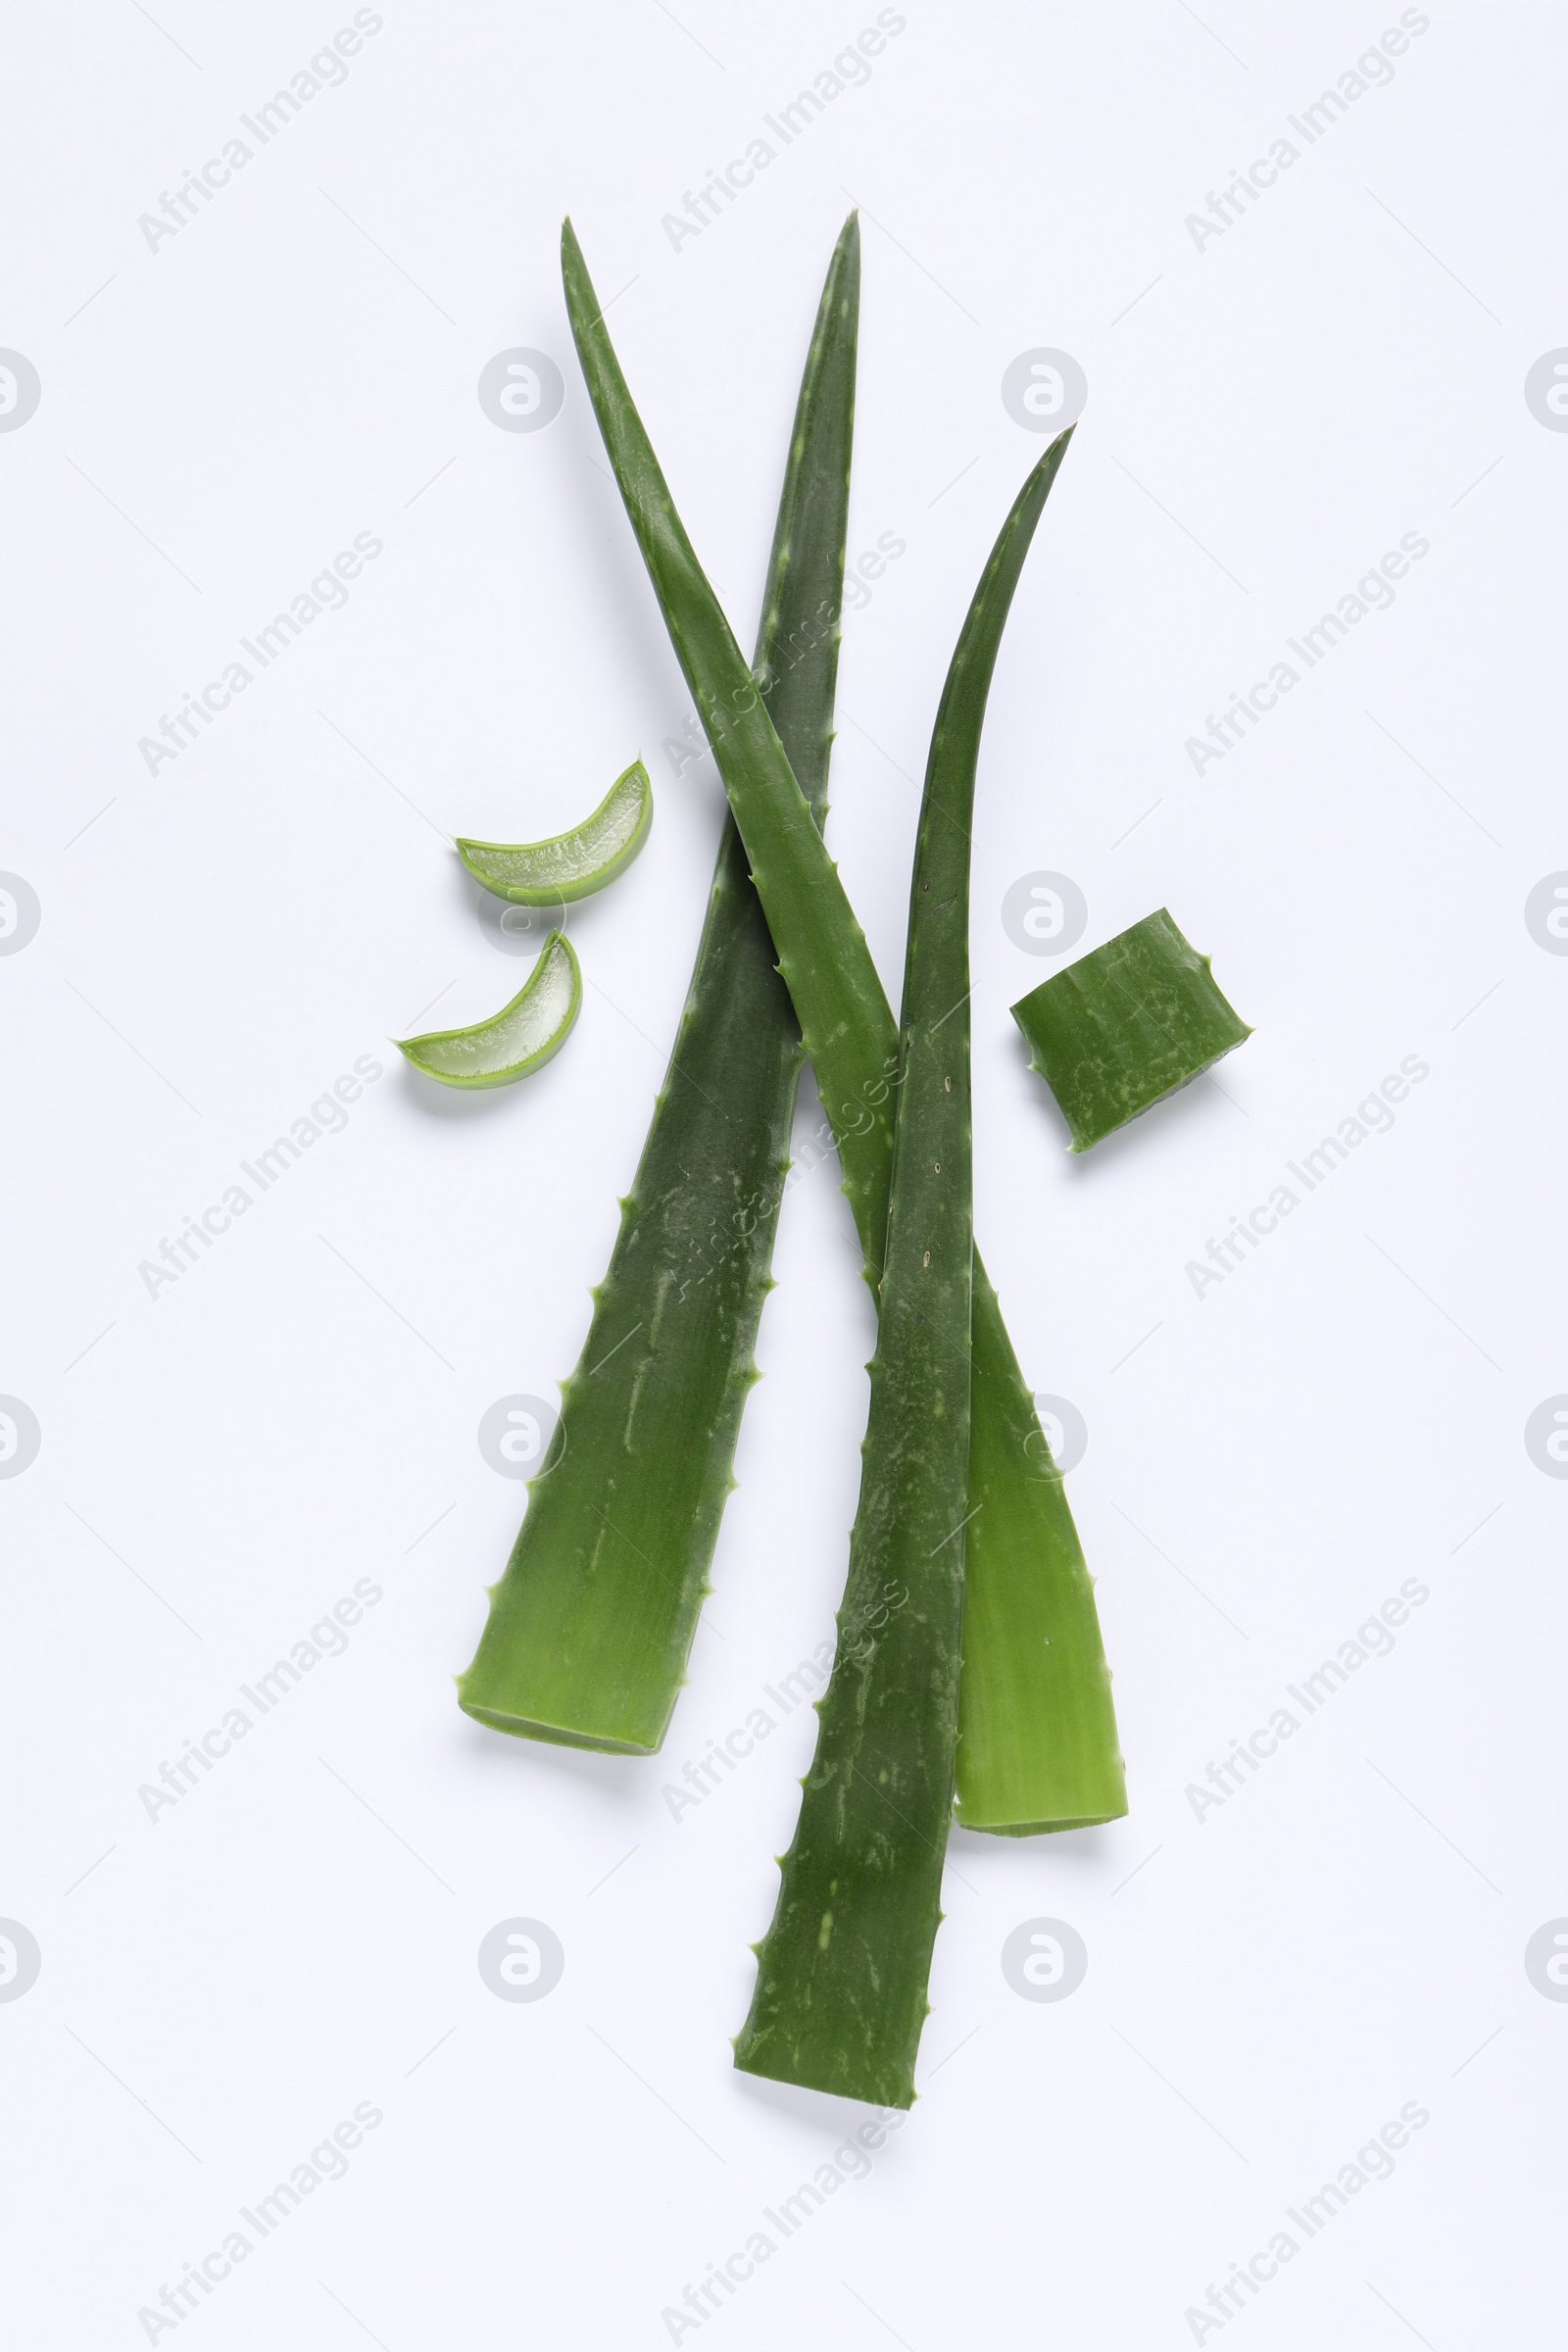 Photo of Cut aloe vera leaves on white background, flat lay